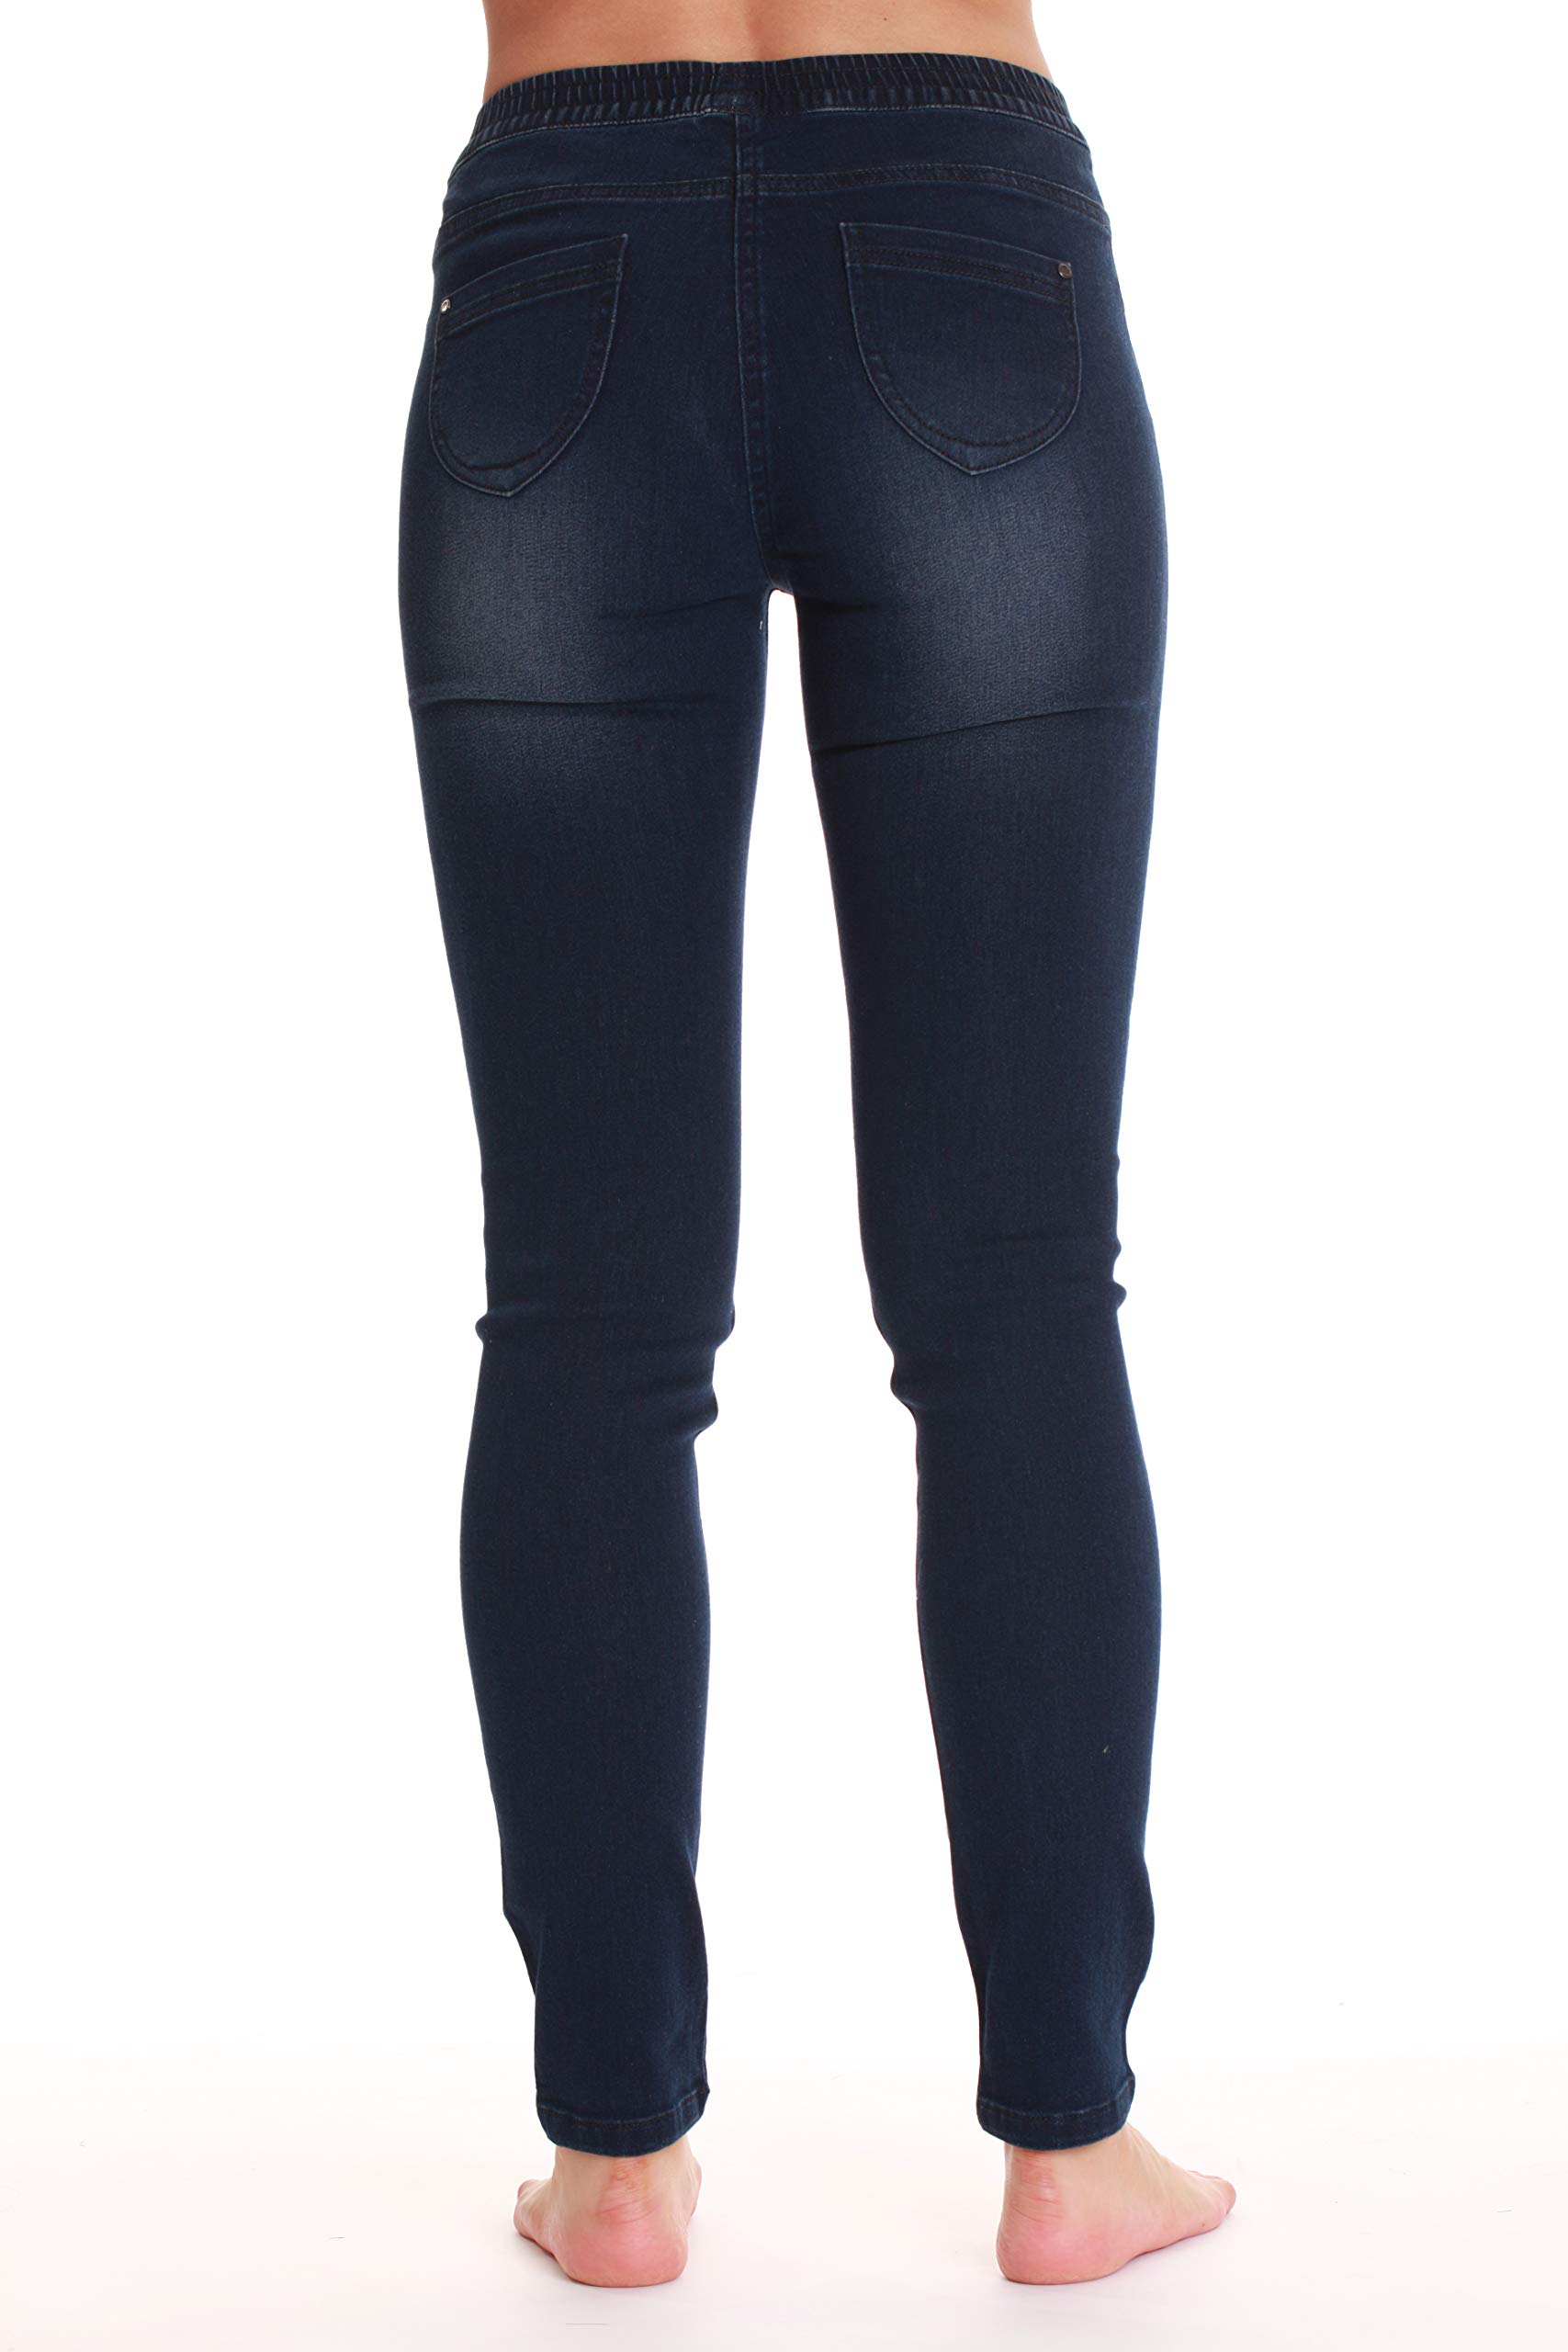 Just Love Women's Denim Jeggings with Pockets - Comfortable Stretch Jeans Leggings (Dark Denim, Large) - image 3 of 3